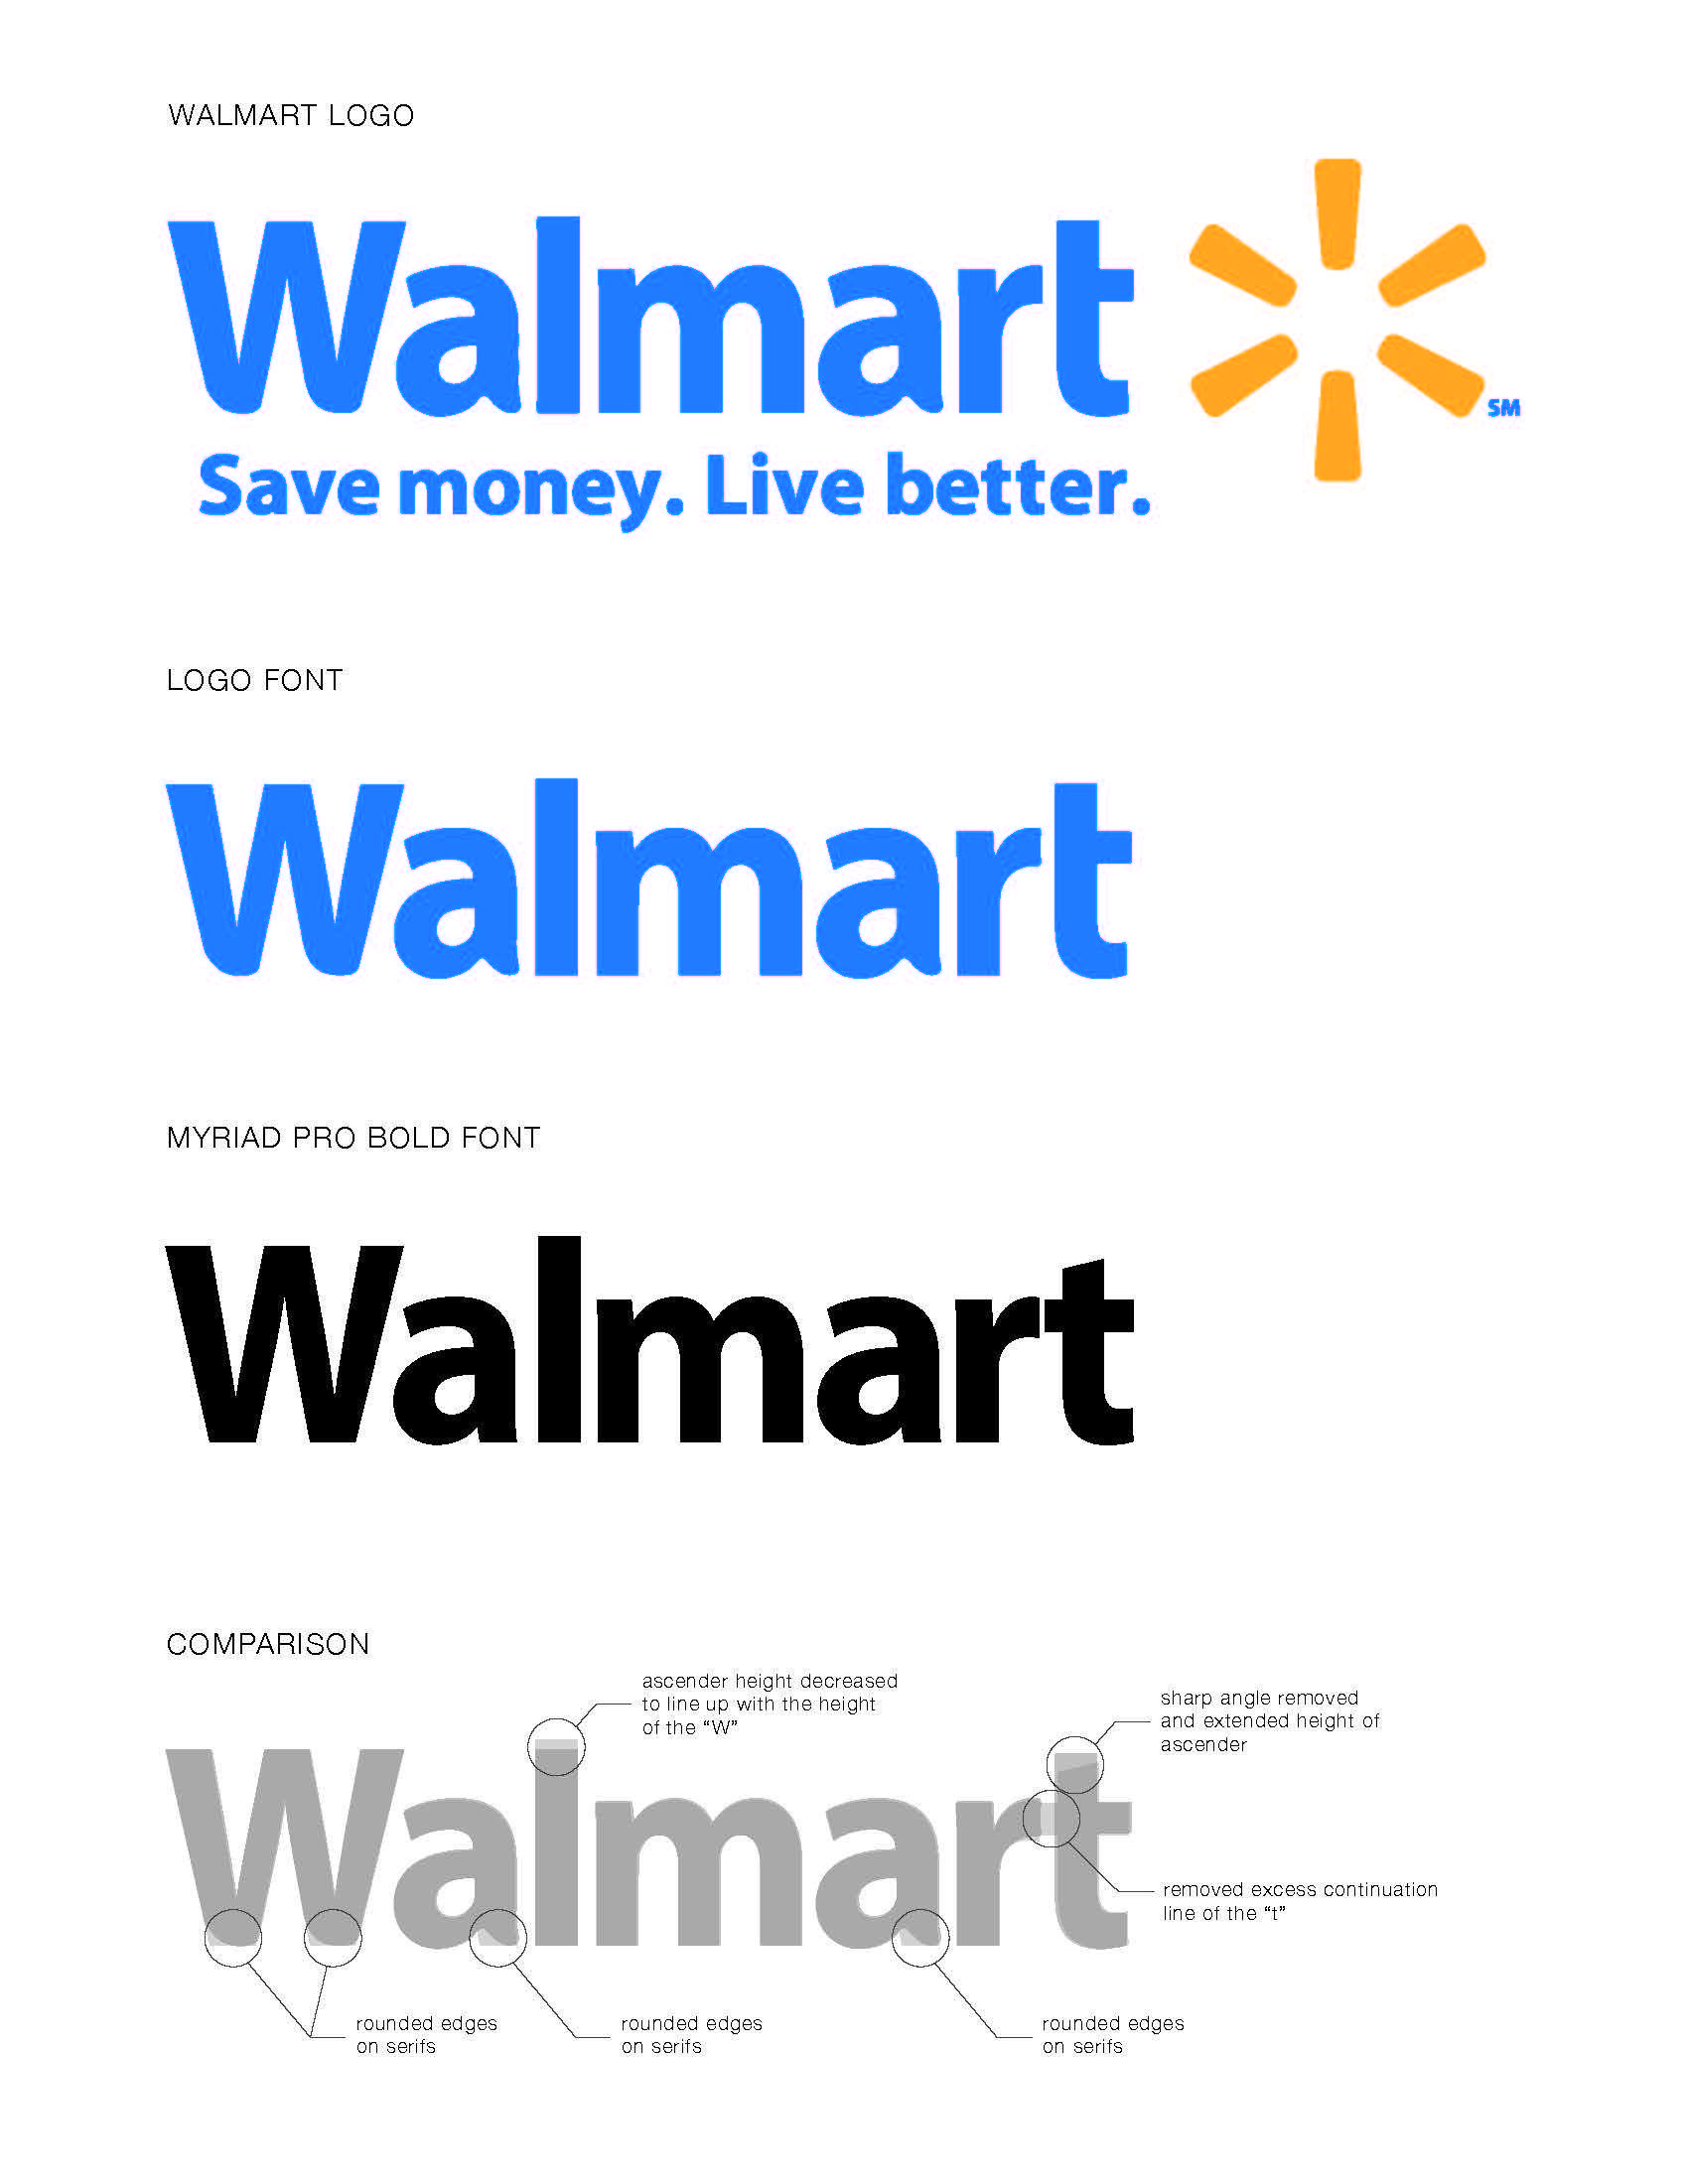 Walmart Old Logo - WAL MART, Foundation donates $1 Million to Hurrican Harvey Victims